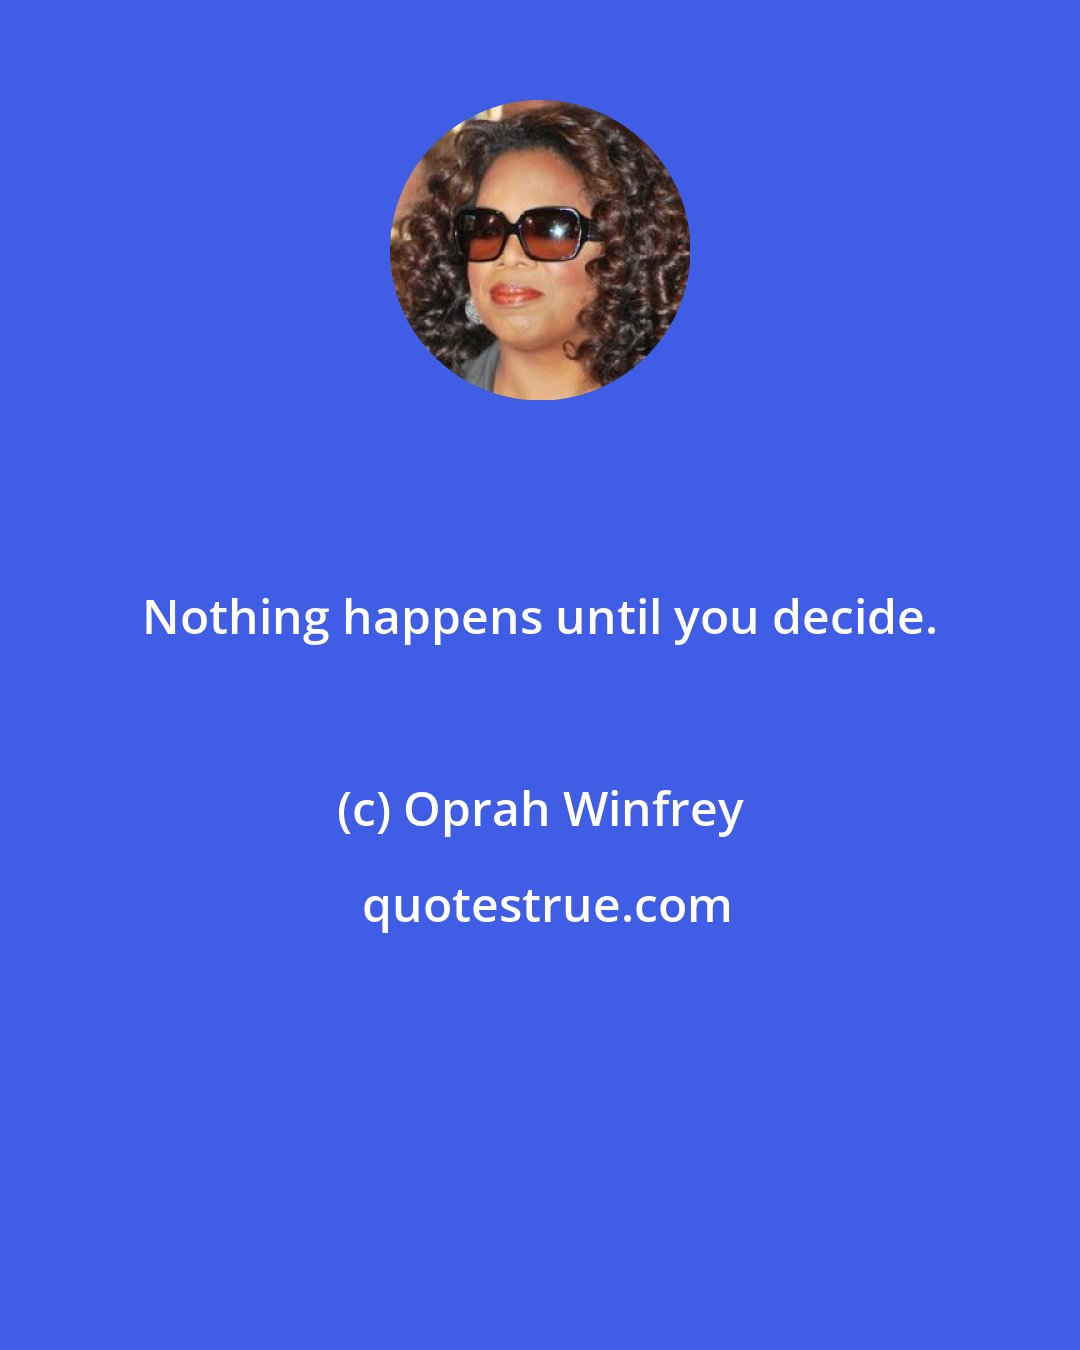 Oprah Winfrey: Nothing happens until you decide.